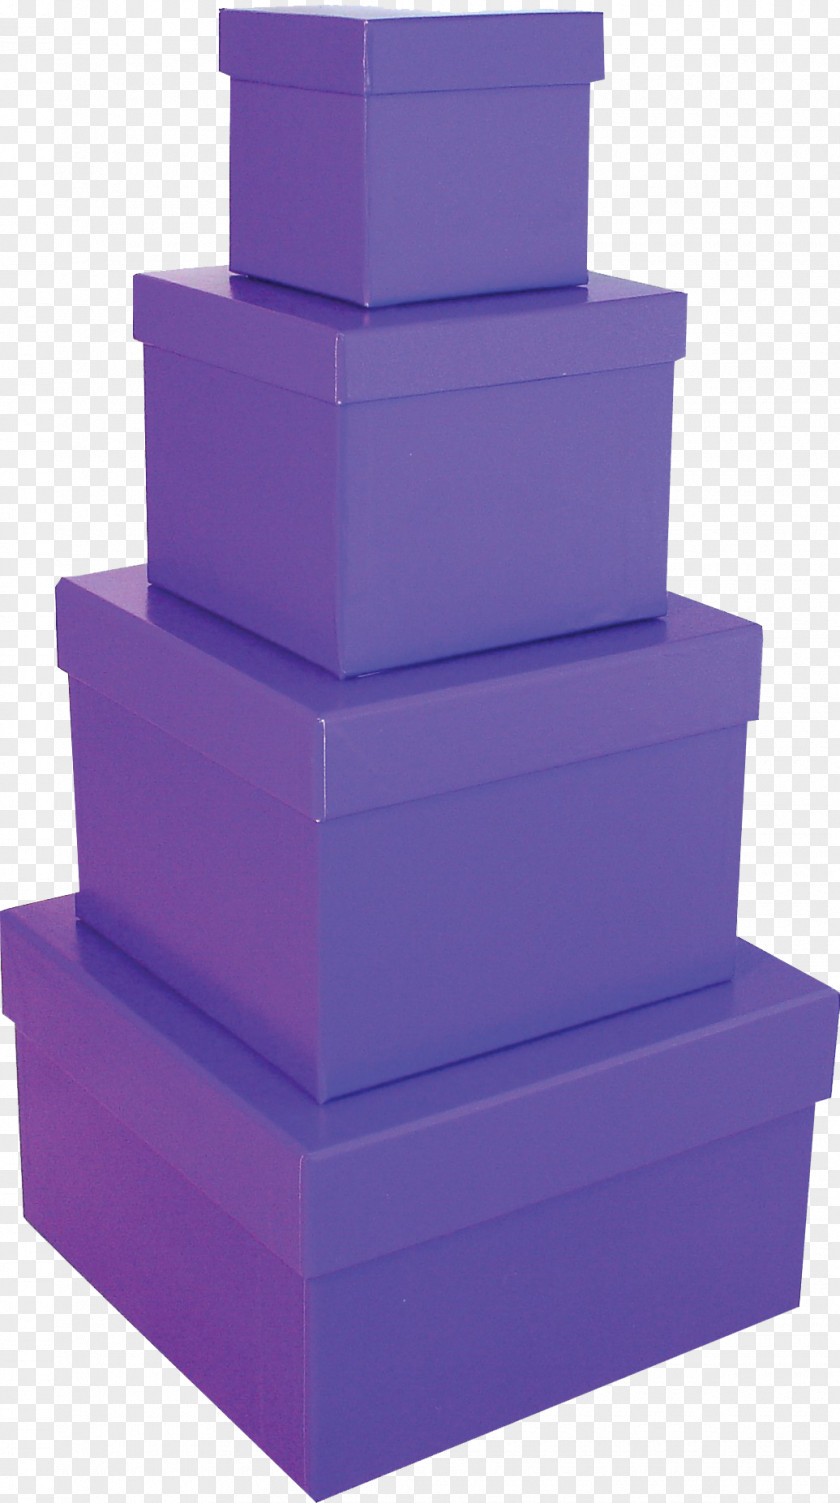 Boxes Packaging And Labeling Gift Klix.ba Kartonske Kutije Lilac PNG